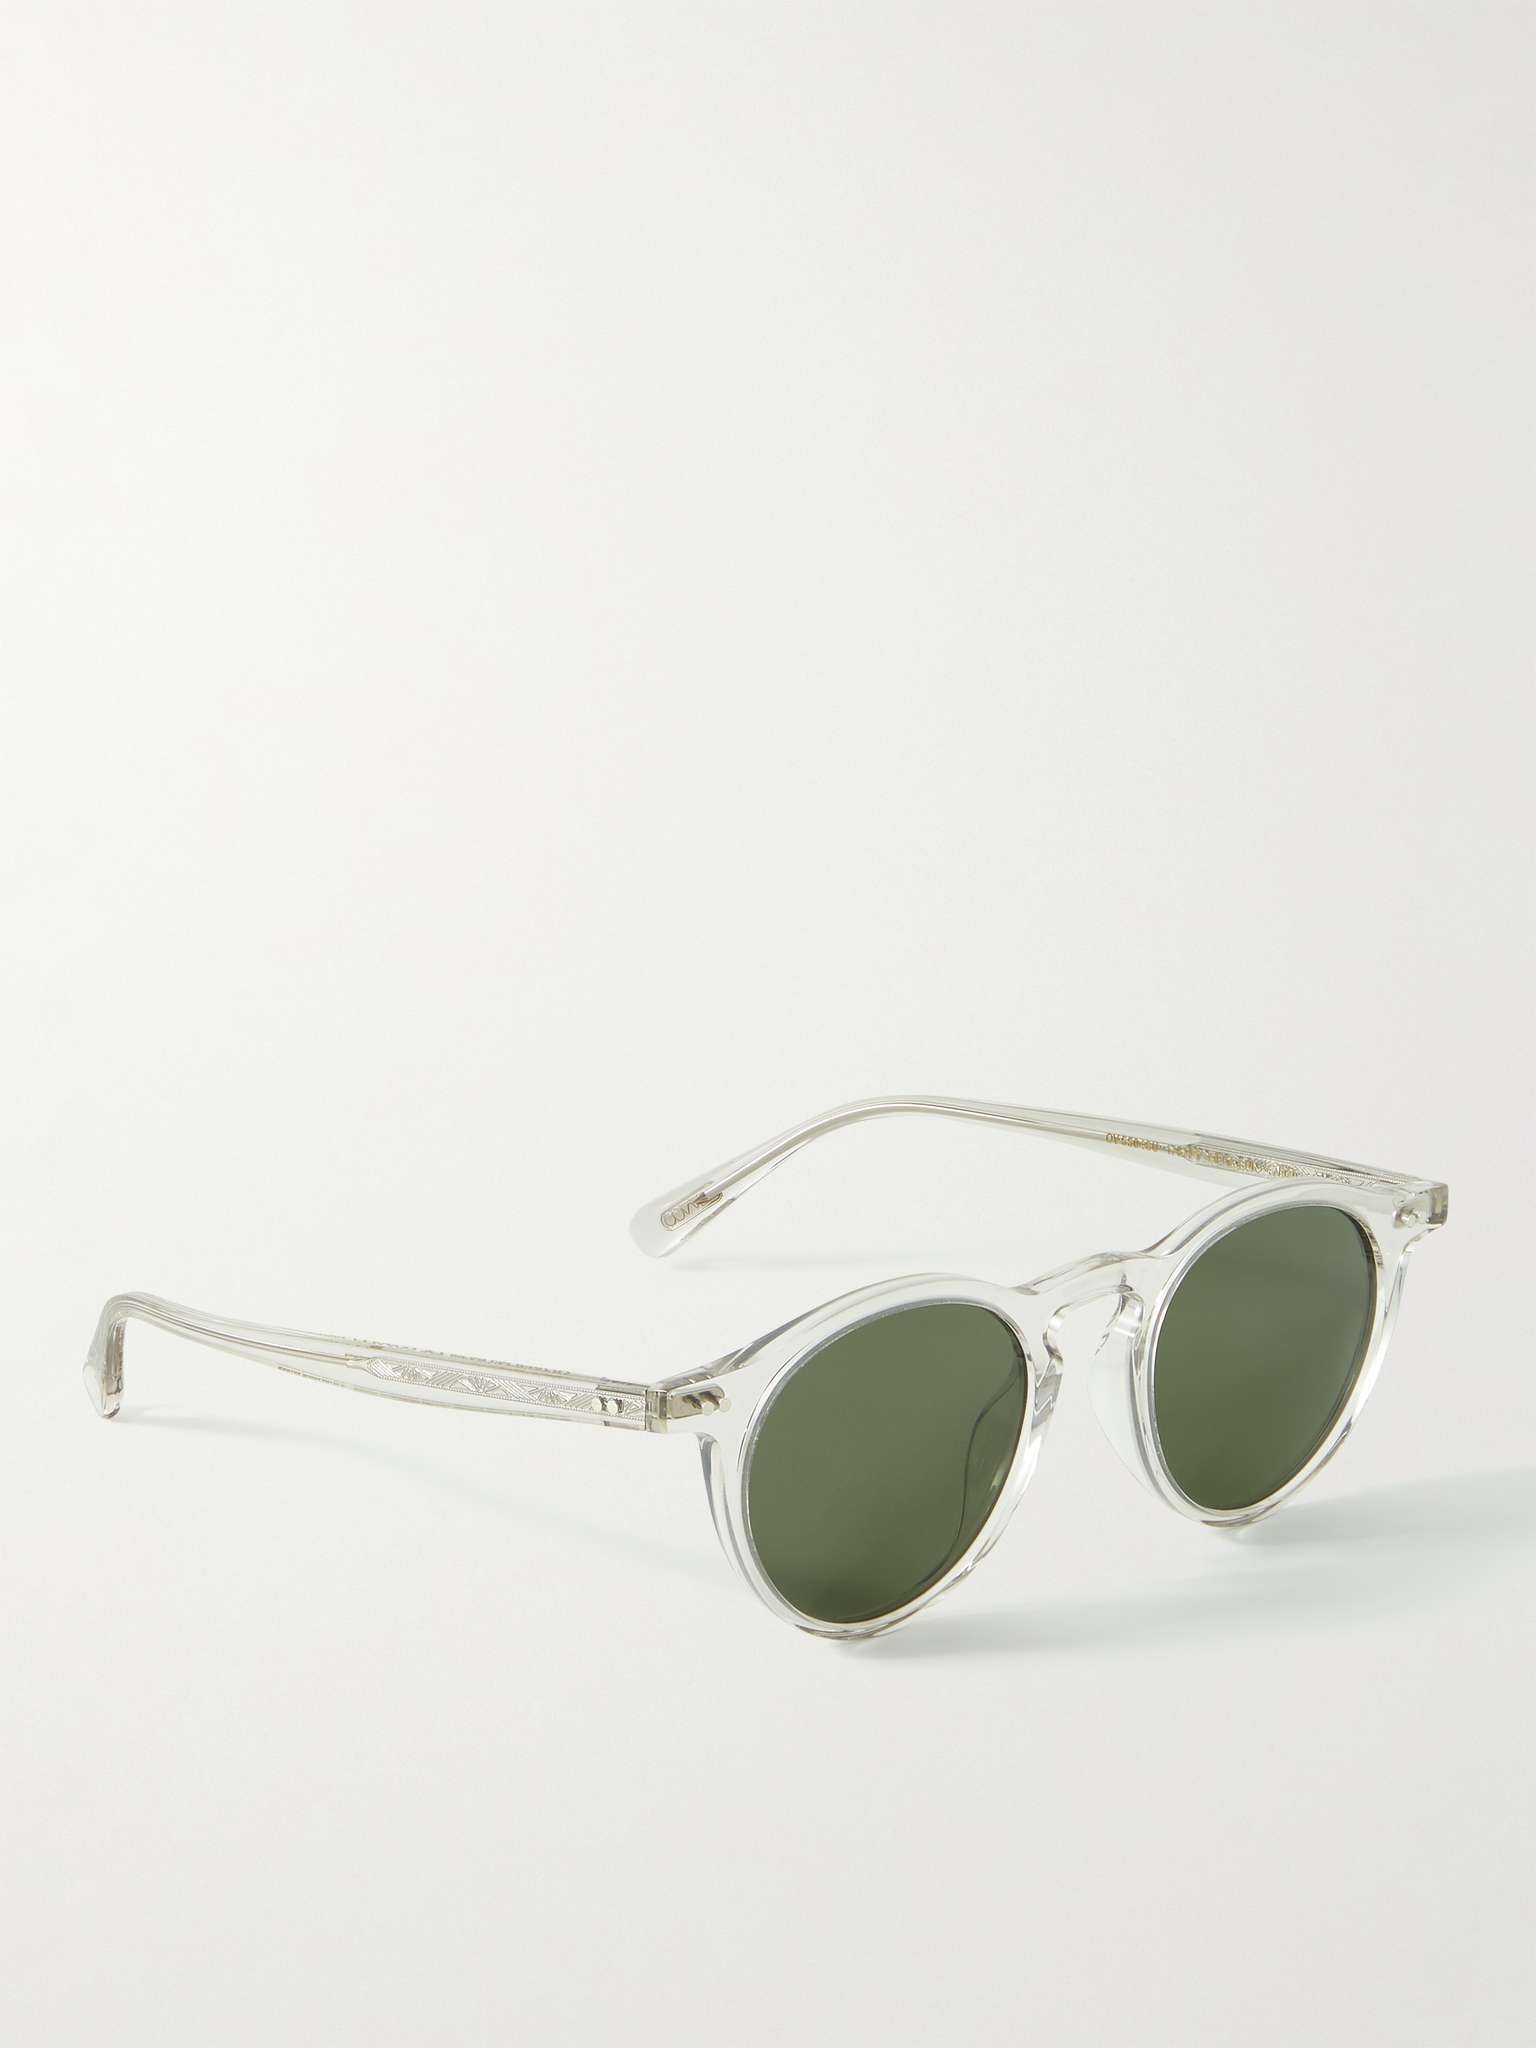 OP-13 Round-Frame Tortoiseshell Acetate Sunglasses - 3